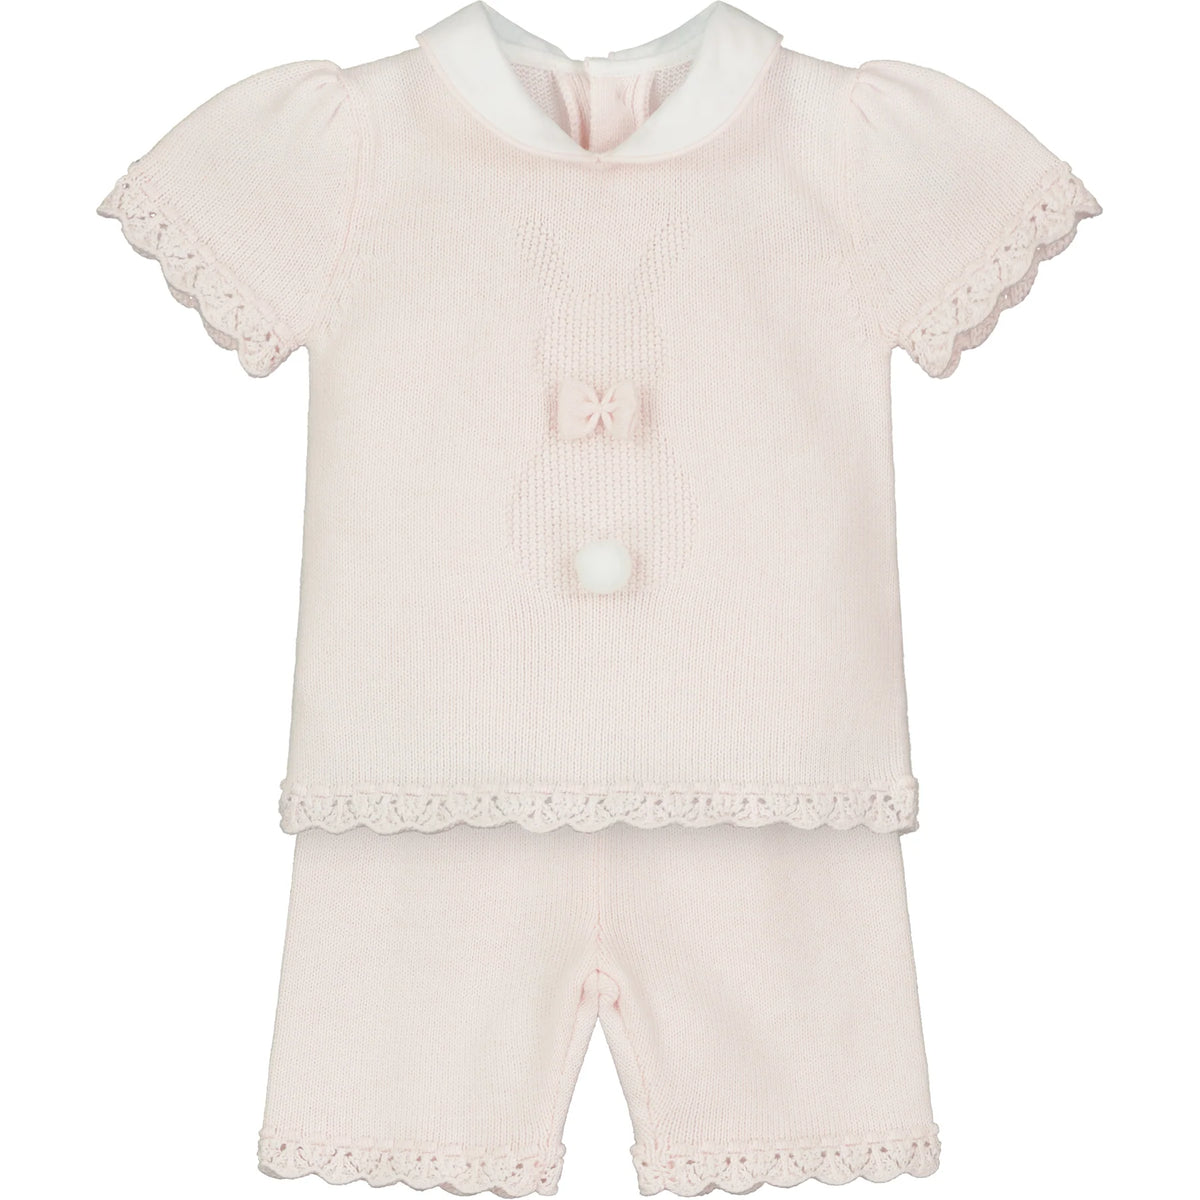 Emile et Rose Baby Pink Knit Bunny Shorts Set